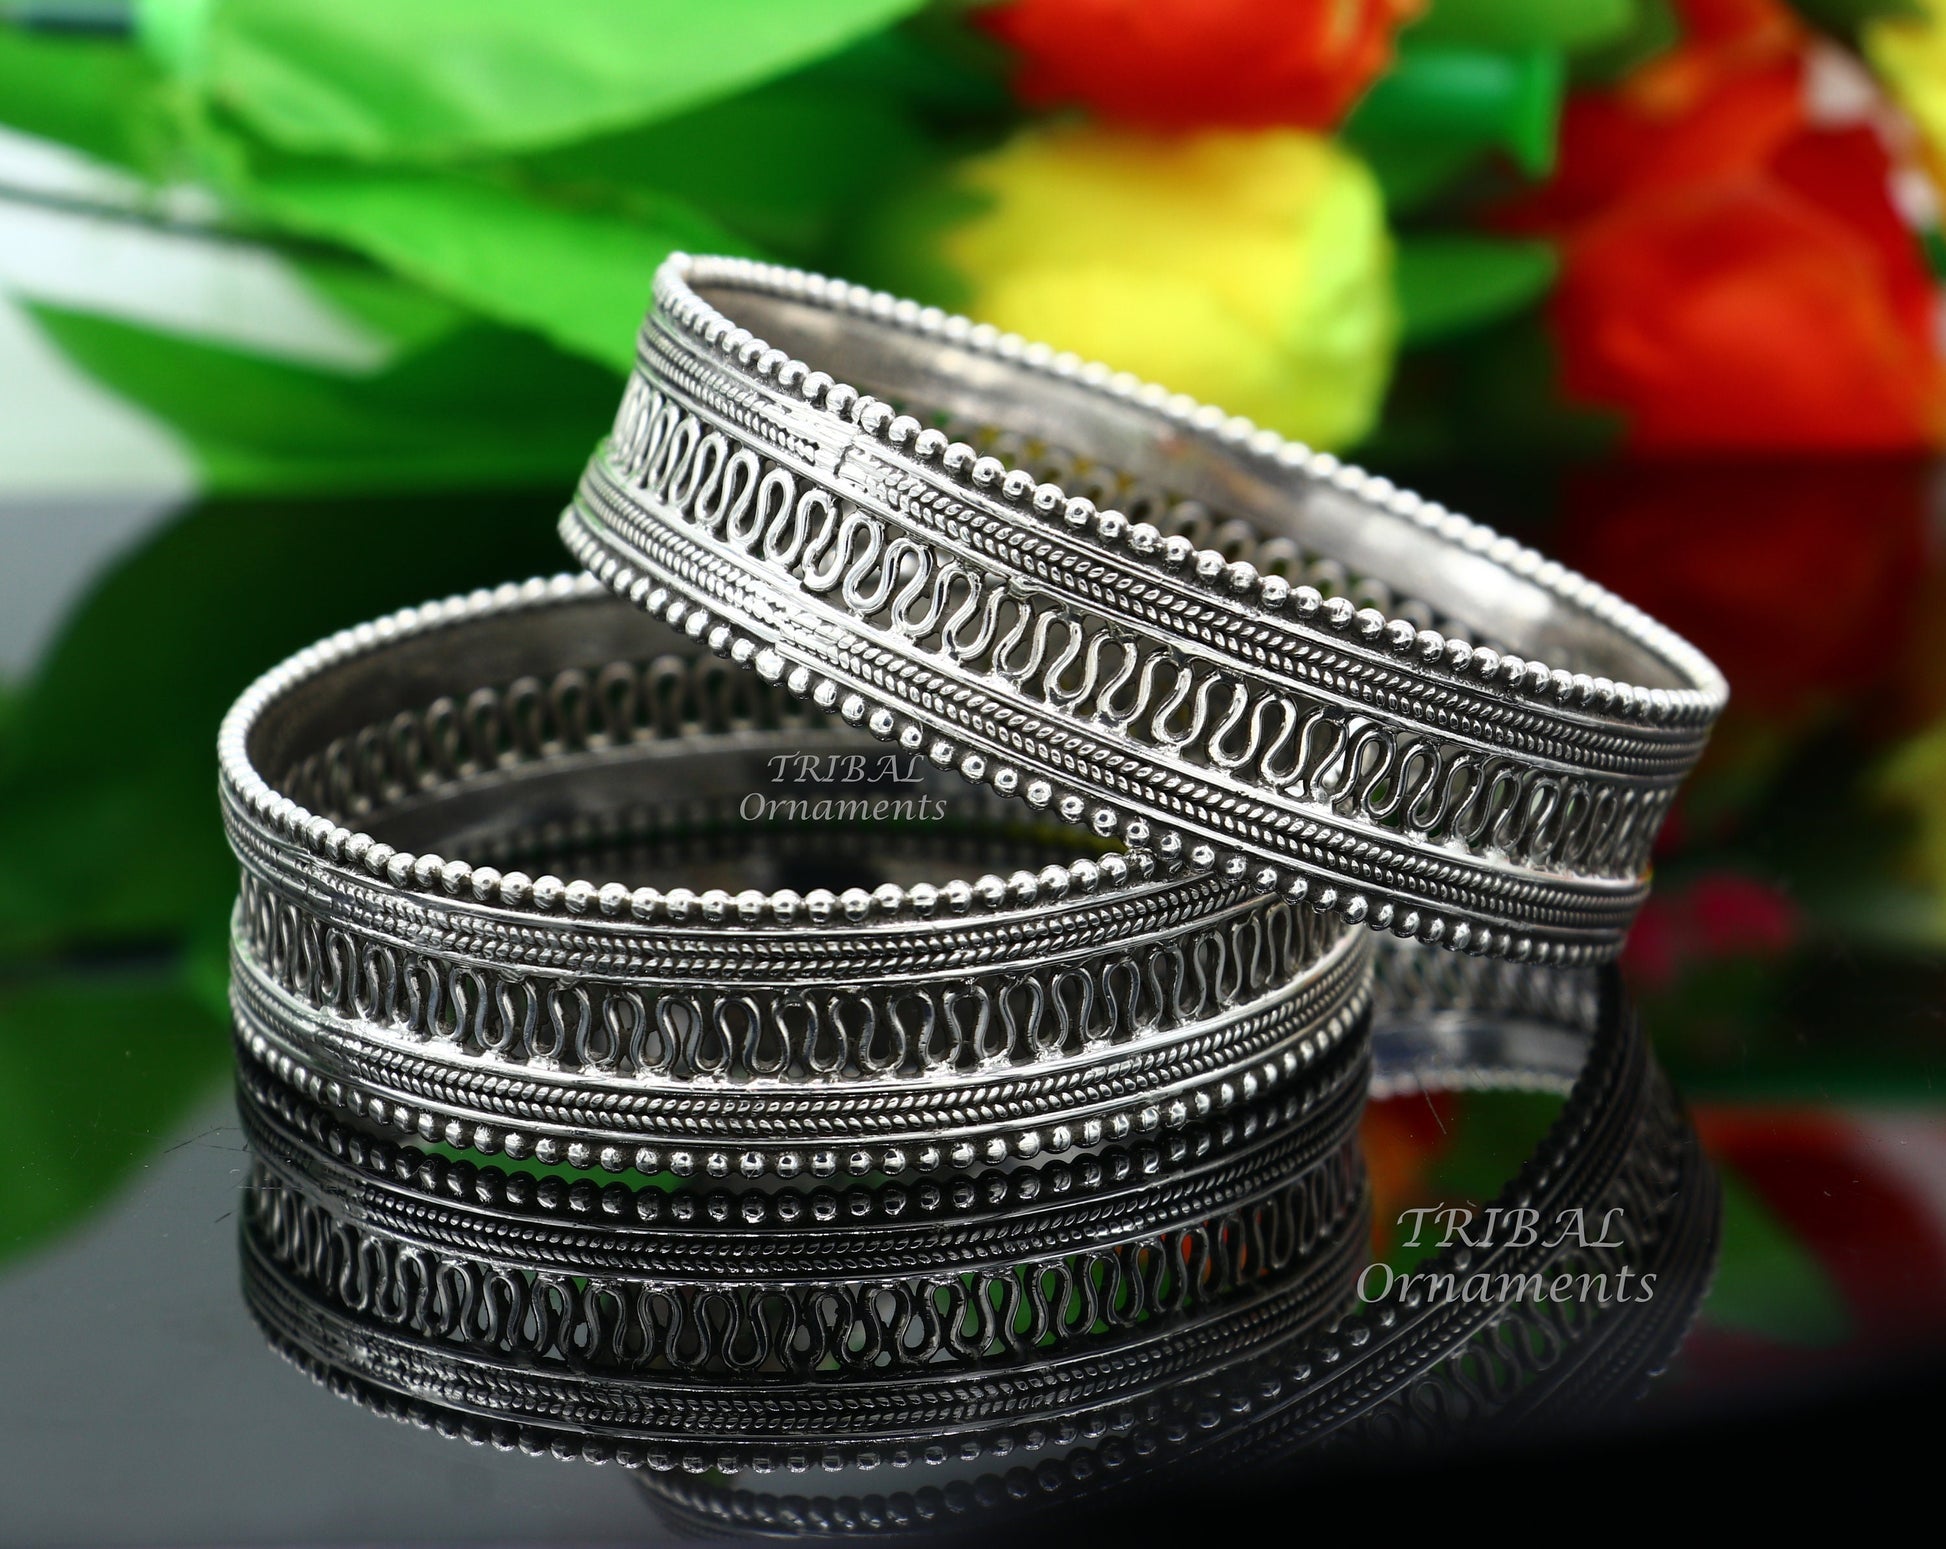 925 sterling silver handmade Vintage design filigree work bangle bracelet kada tribal ethnic jewelry best bride belly dance gifting ba155 - TRIBAL ORNAMENTS